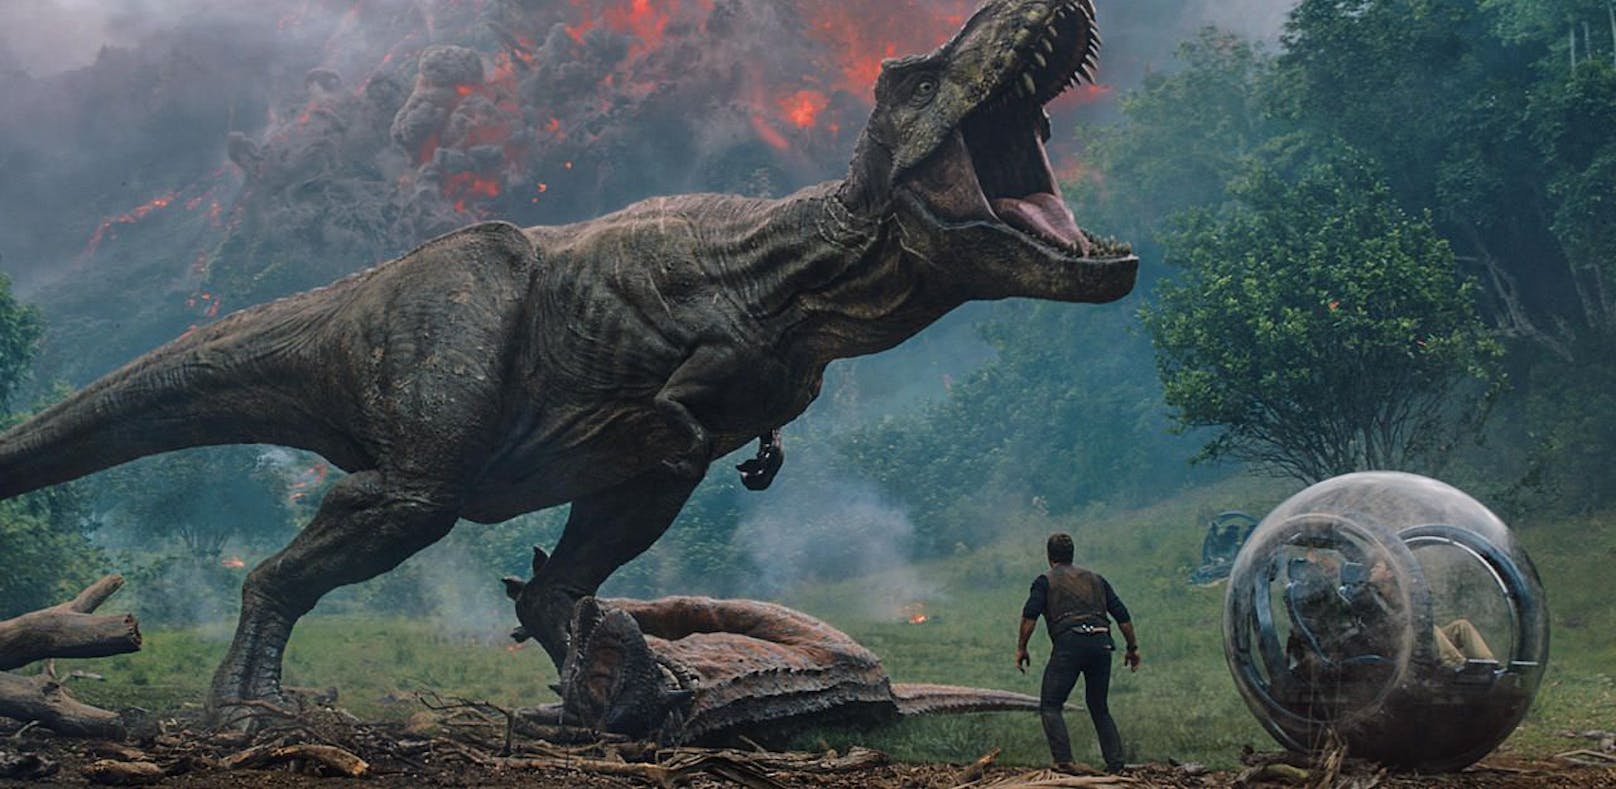 Chris Pratt vs. T-Rex im "Jurassic World" TV-Spot